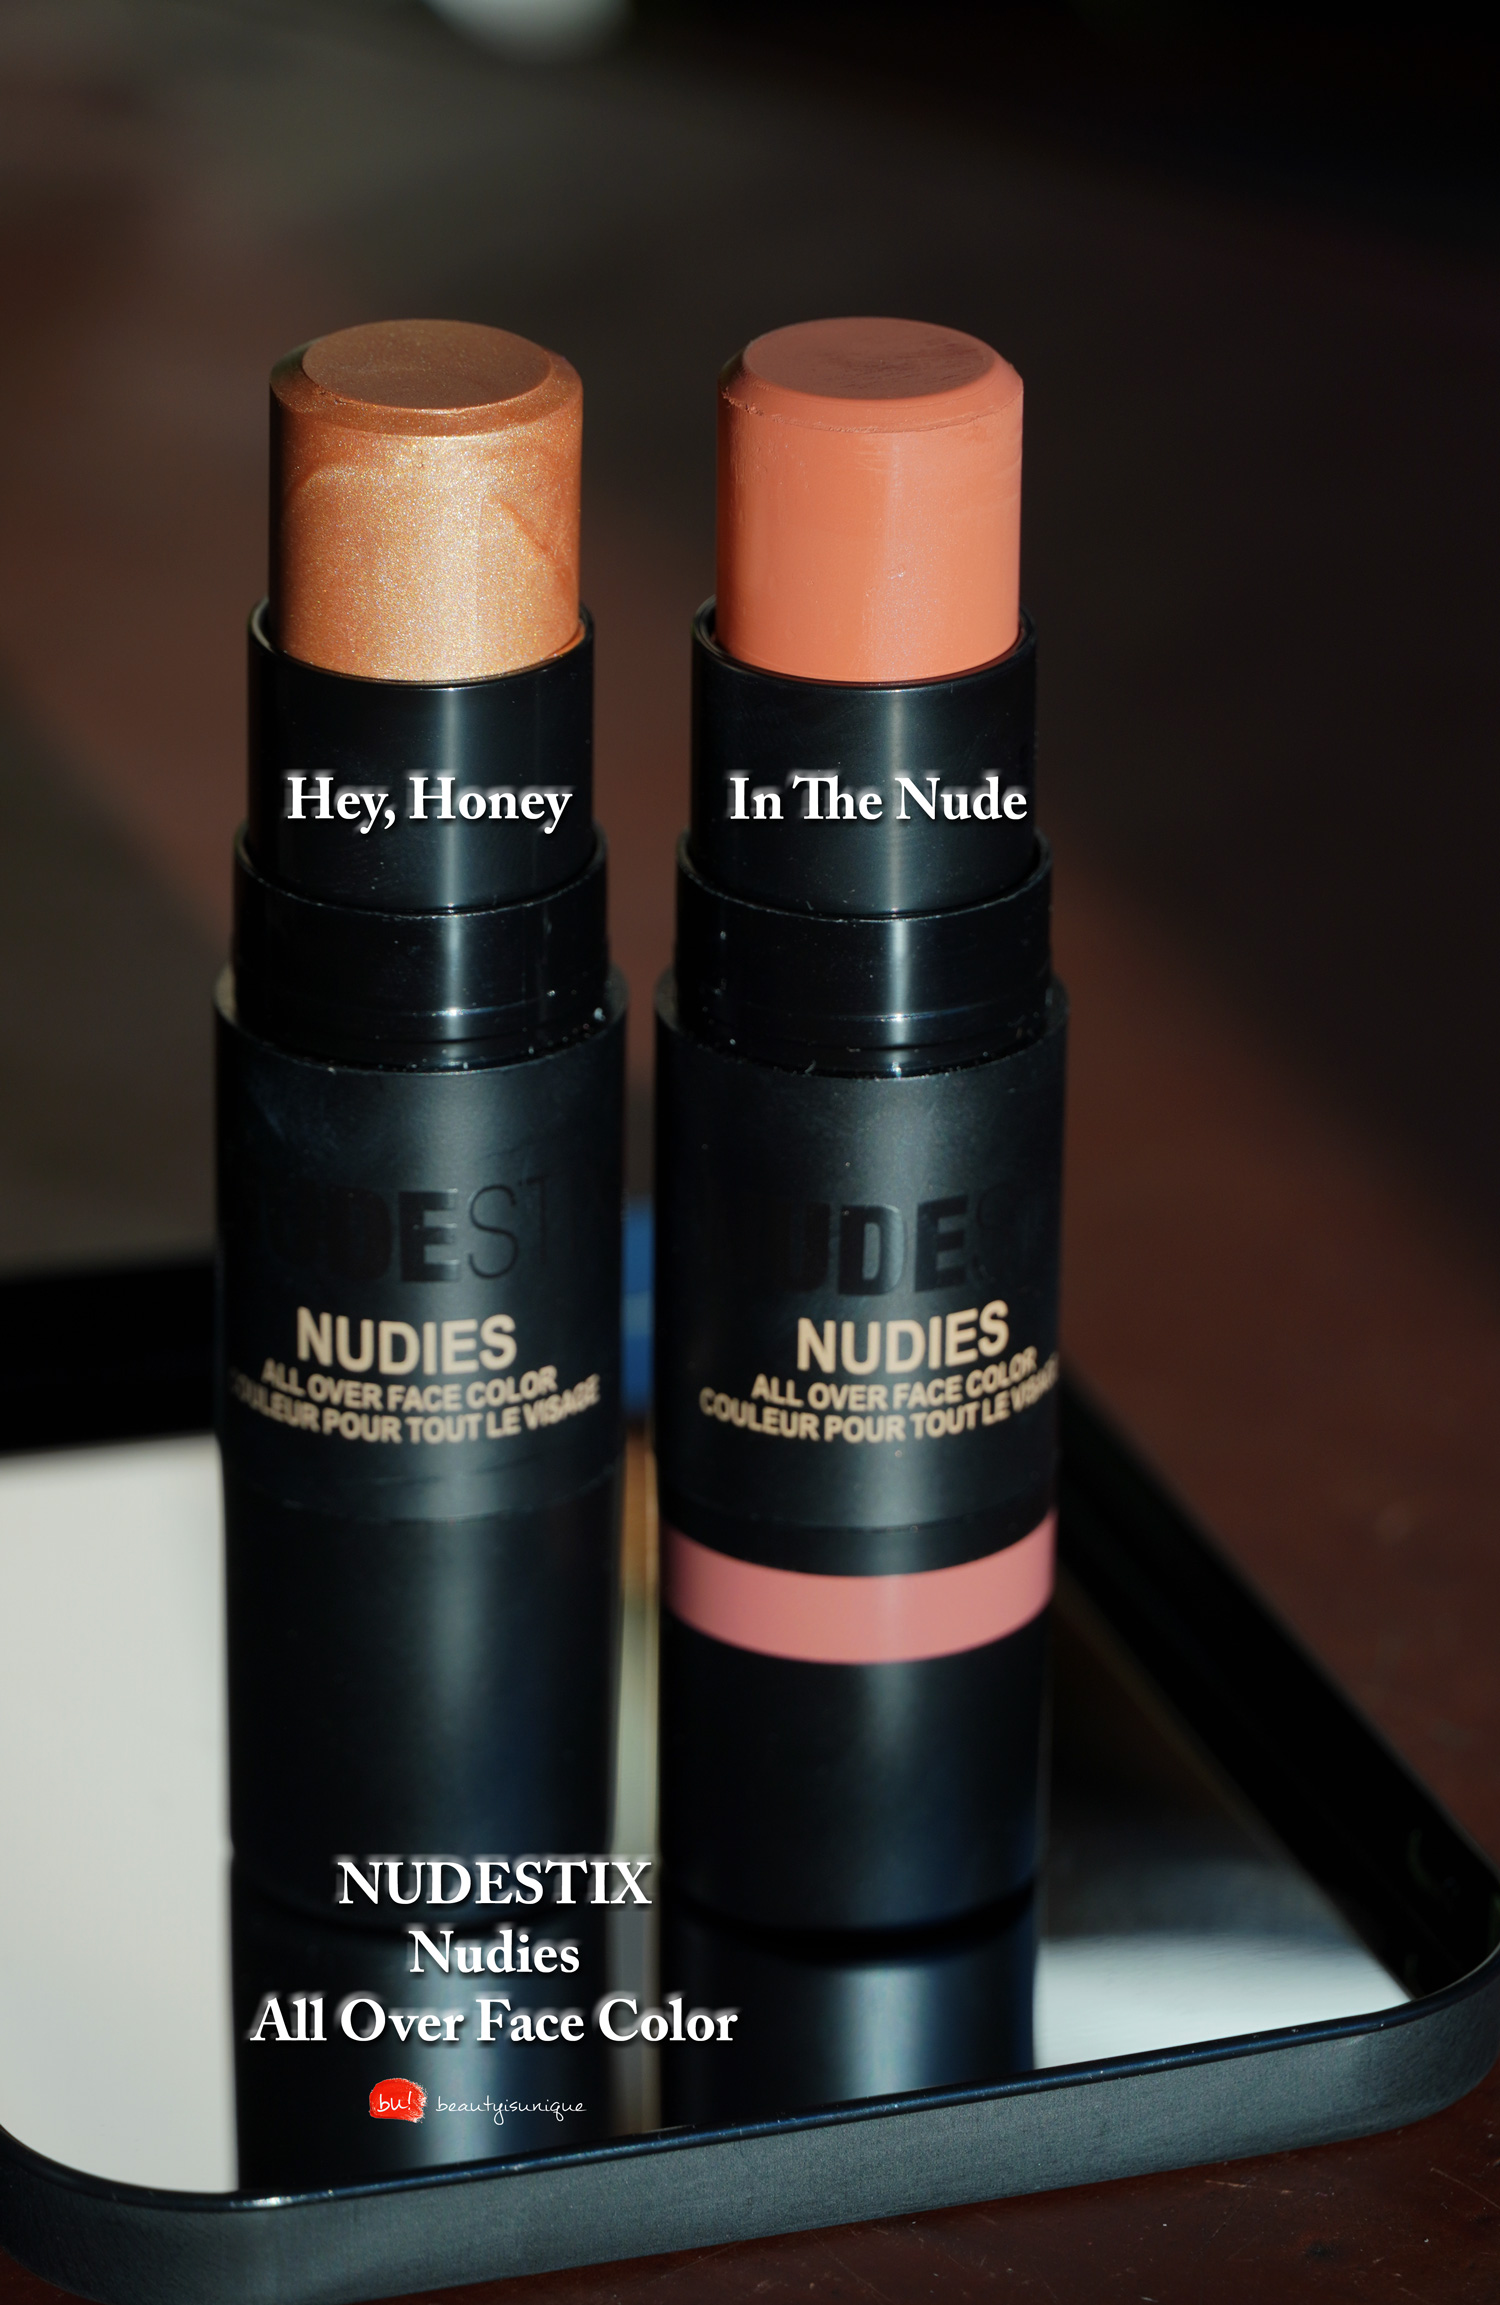 nudestix-nudies-in-the-nude